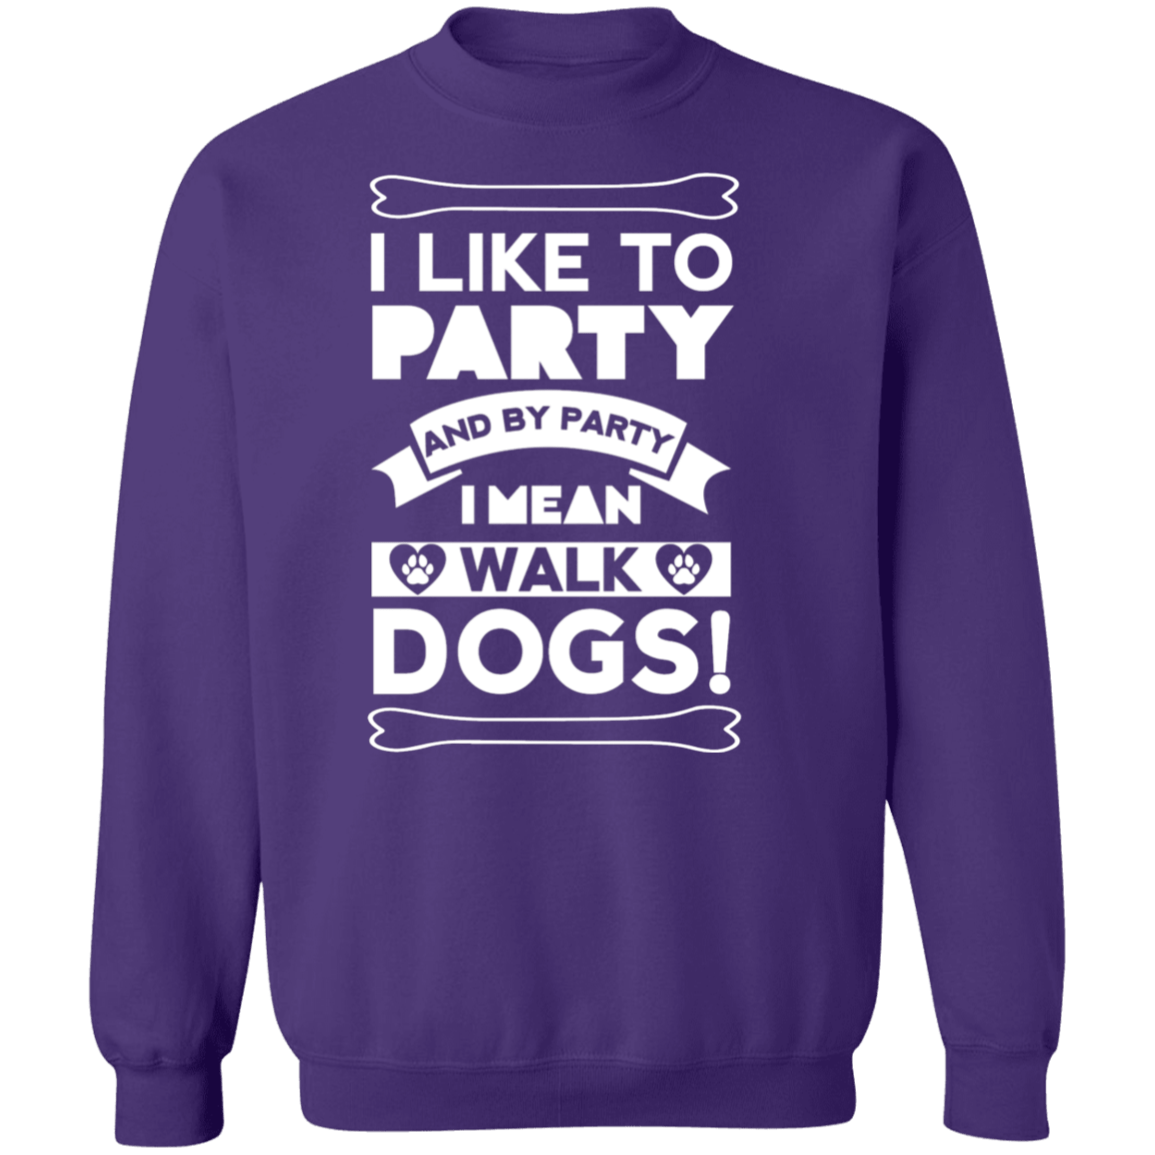 I Like To Party Dogs - Sweatshirt.